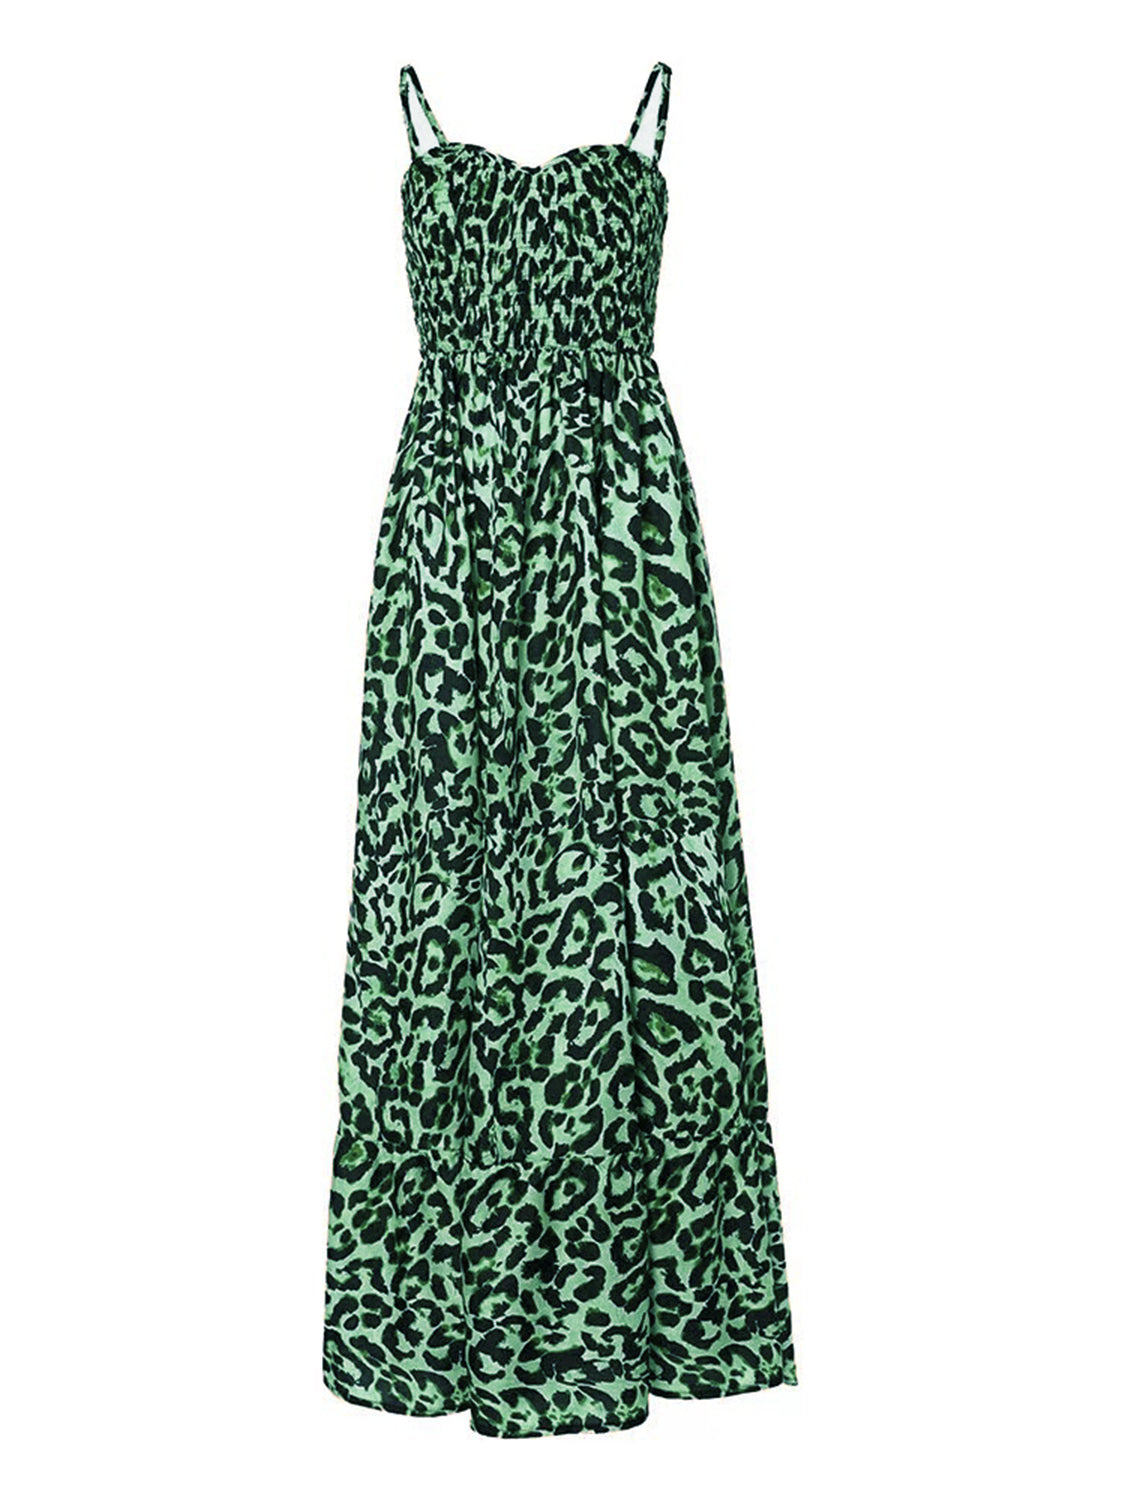 Leopard Cami Dress